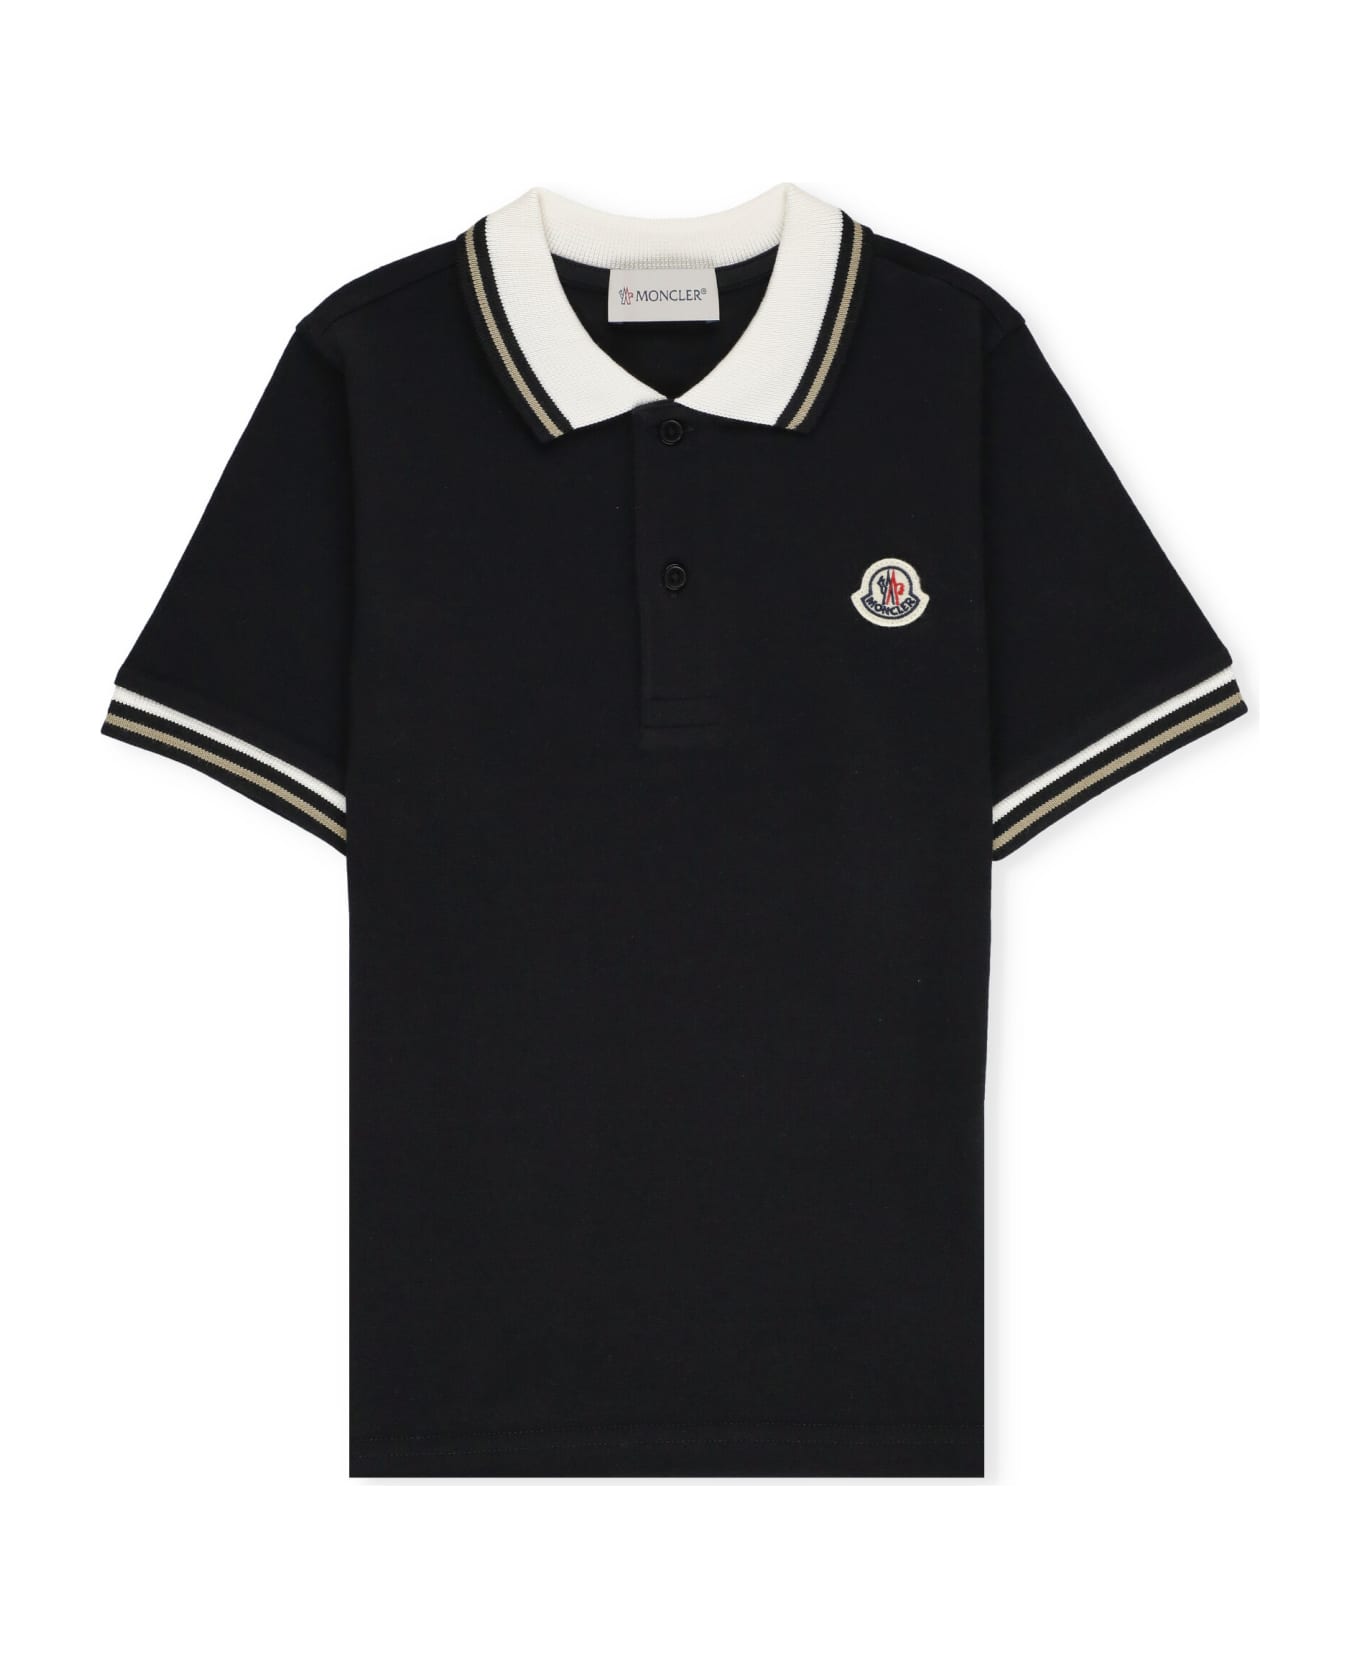 Moncler Logoed Polo Shirt - Black